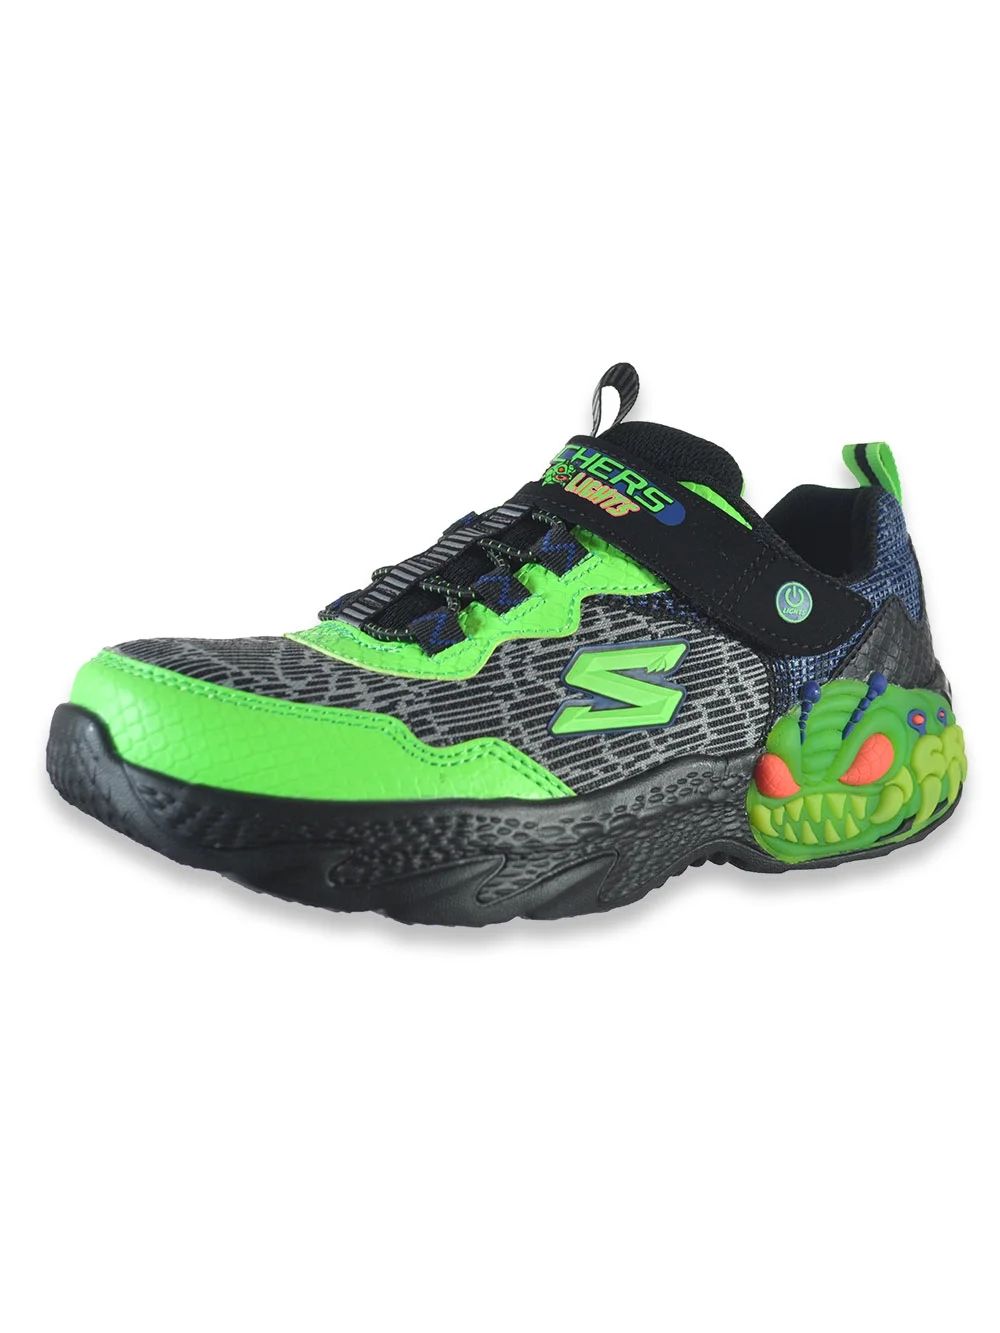 Skechers Boys' Creature Light-Up Sneakers - Black Multi, 1 Youth | Walmart (US)